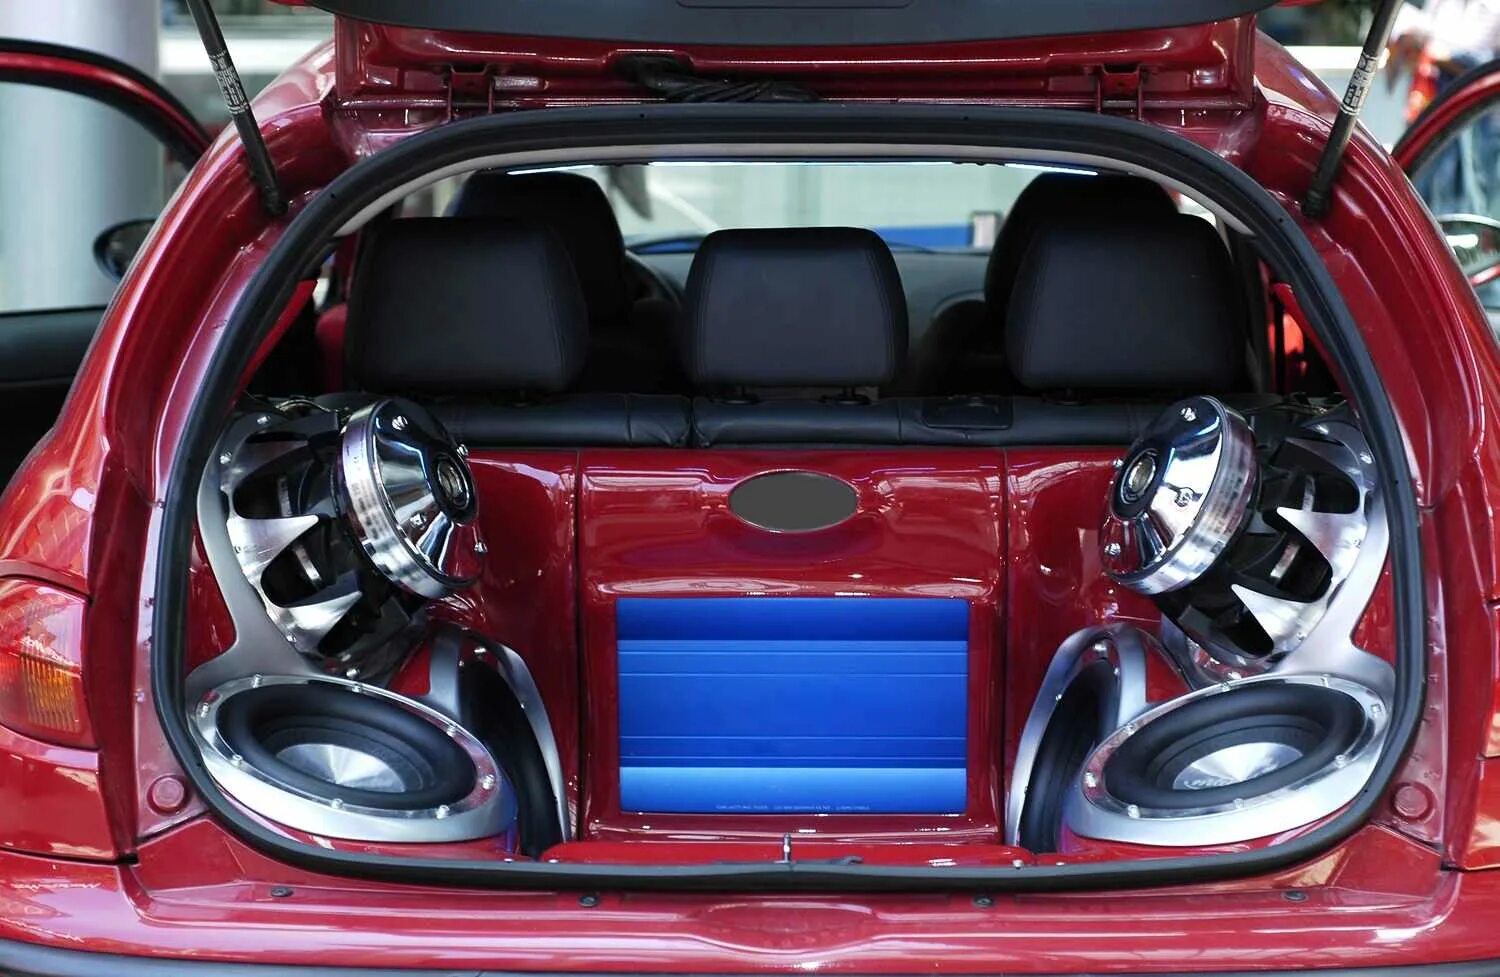 Bass auto. Car Audio System 60wx4. Car Audio в Bentley Continental gt 2008 Speakers. Автозвук Пежо 206. Сабвуфер Пежо 206 кабриолет.